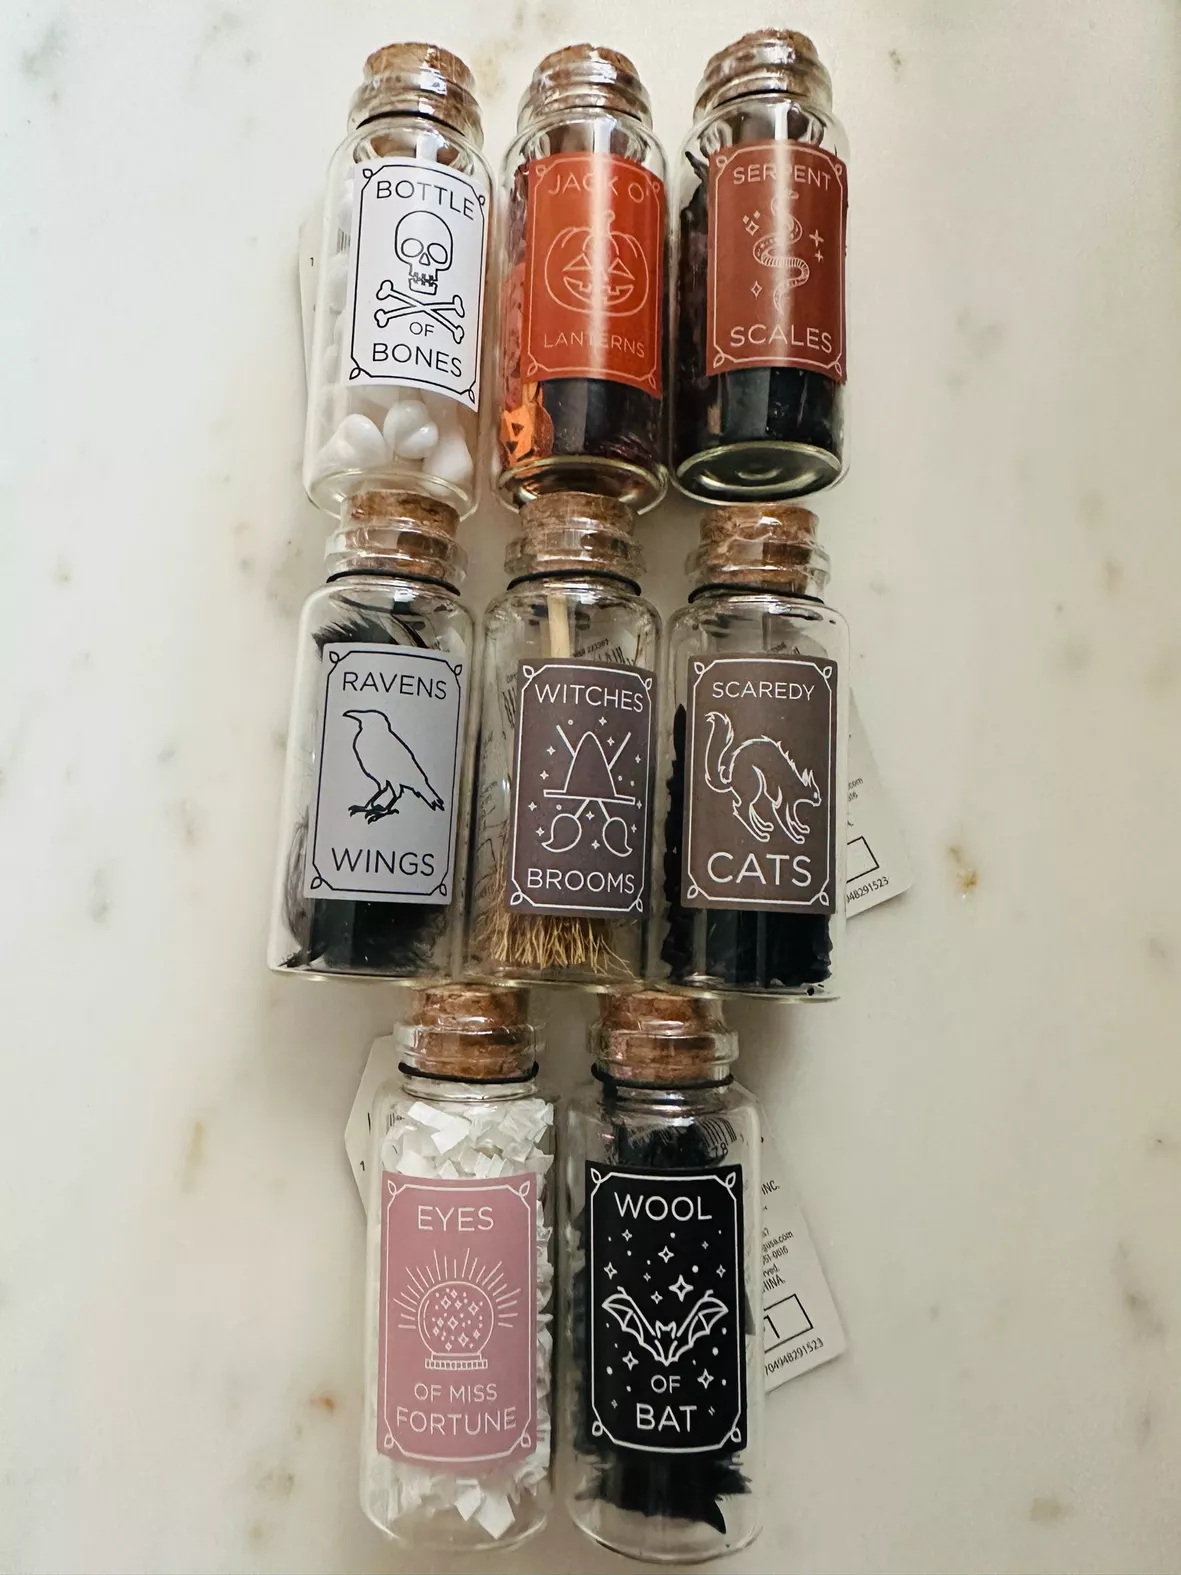 Small Spice Jars : Target